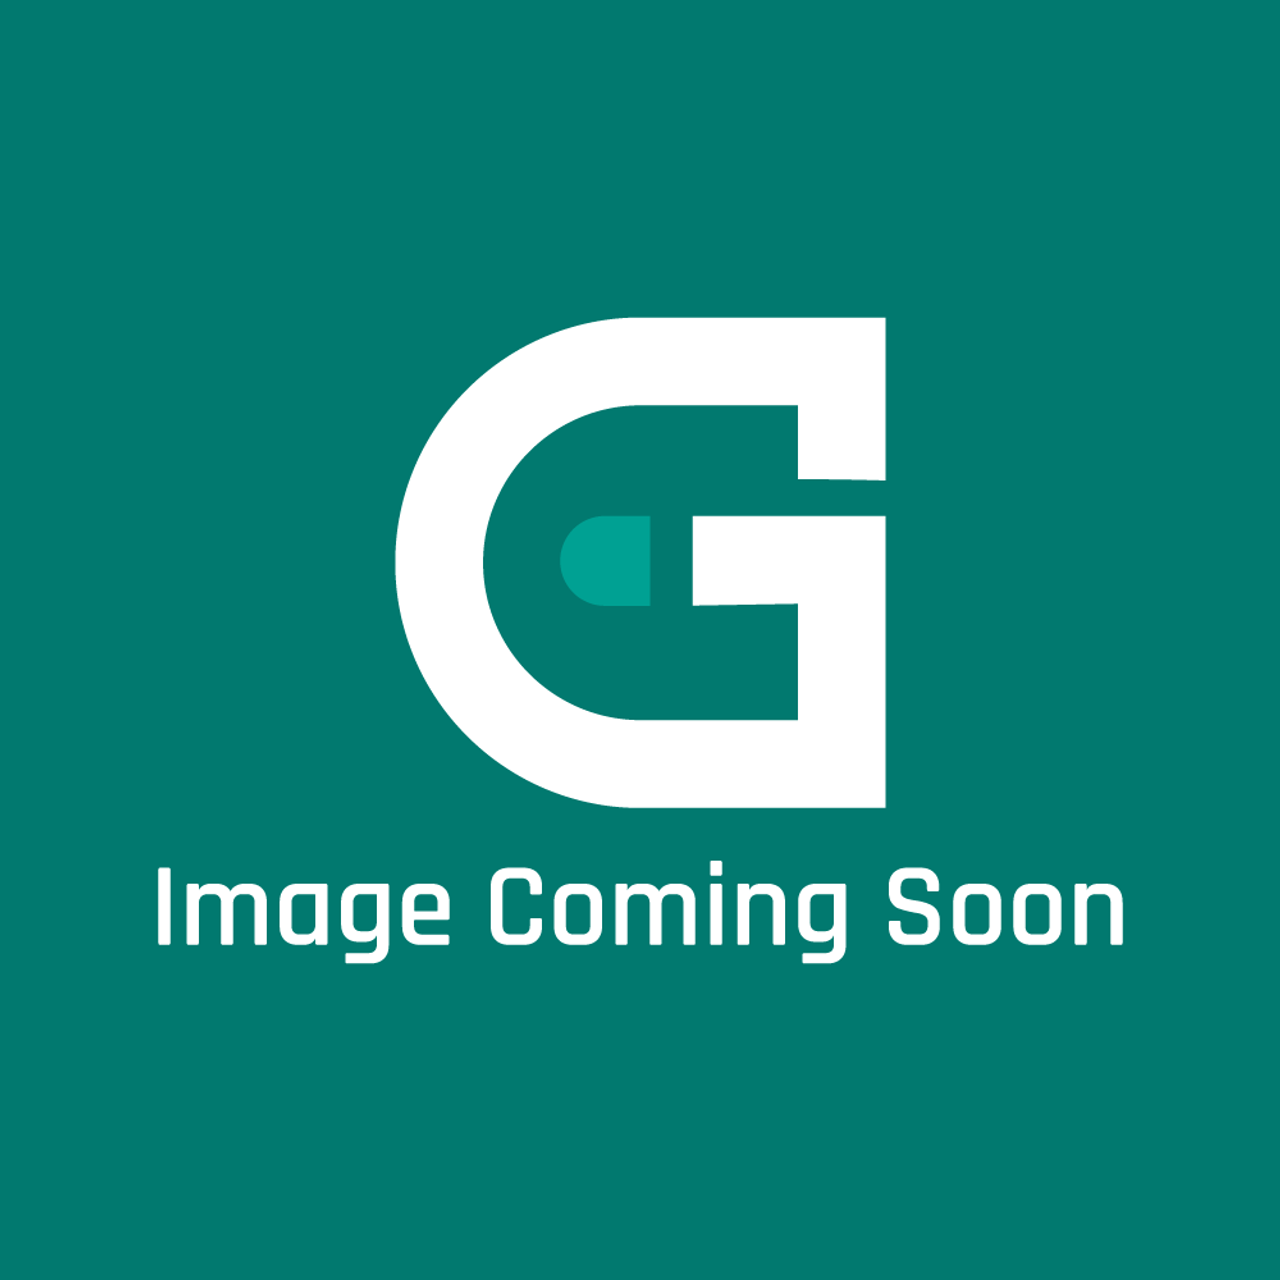 AGA Marvel SAG-AE4M280900 - Tc/Dc Hotcupboard Handrail Assy - Image Coming Soon!